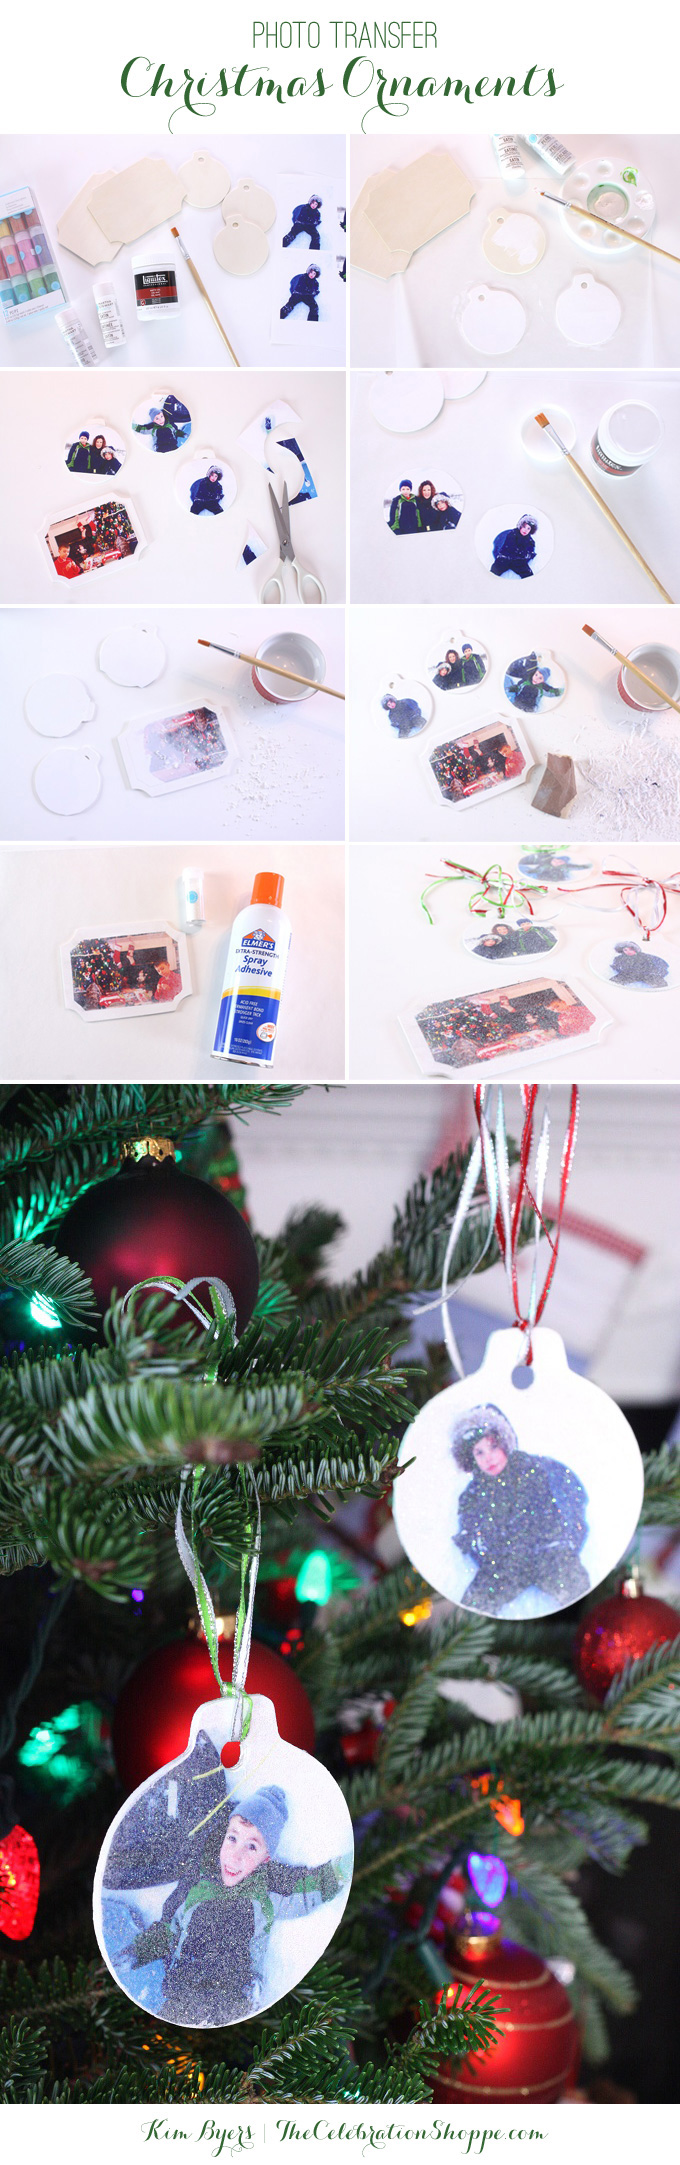 Make Photo Transfer Christmas Ornaments | Kim Byers